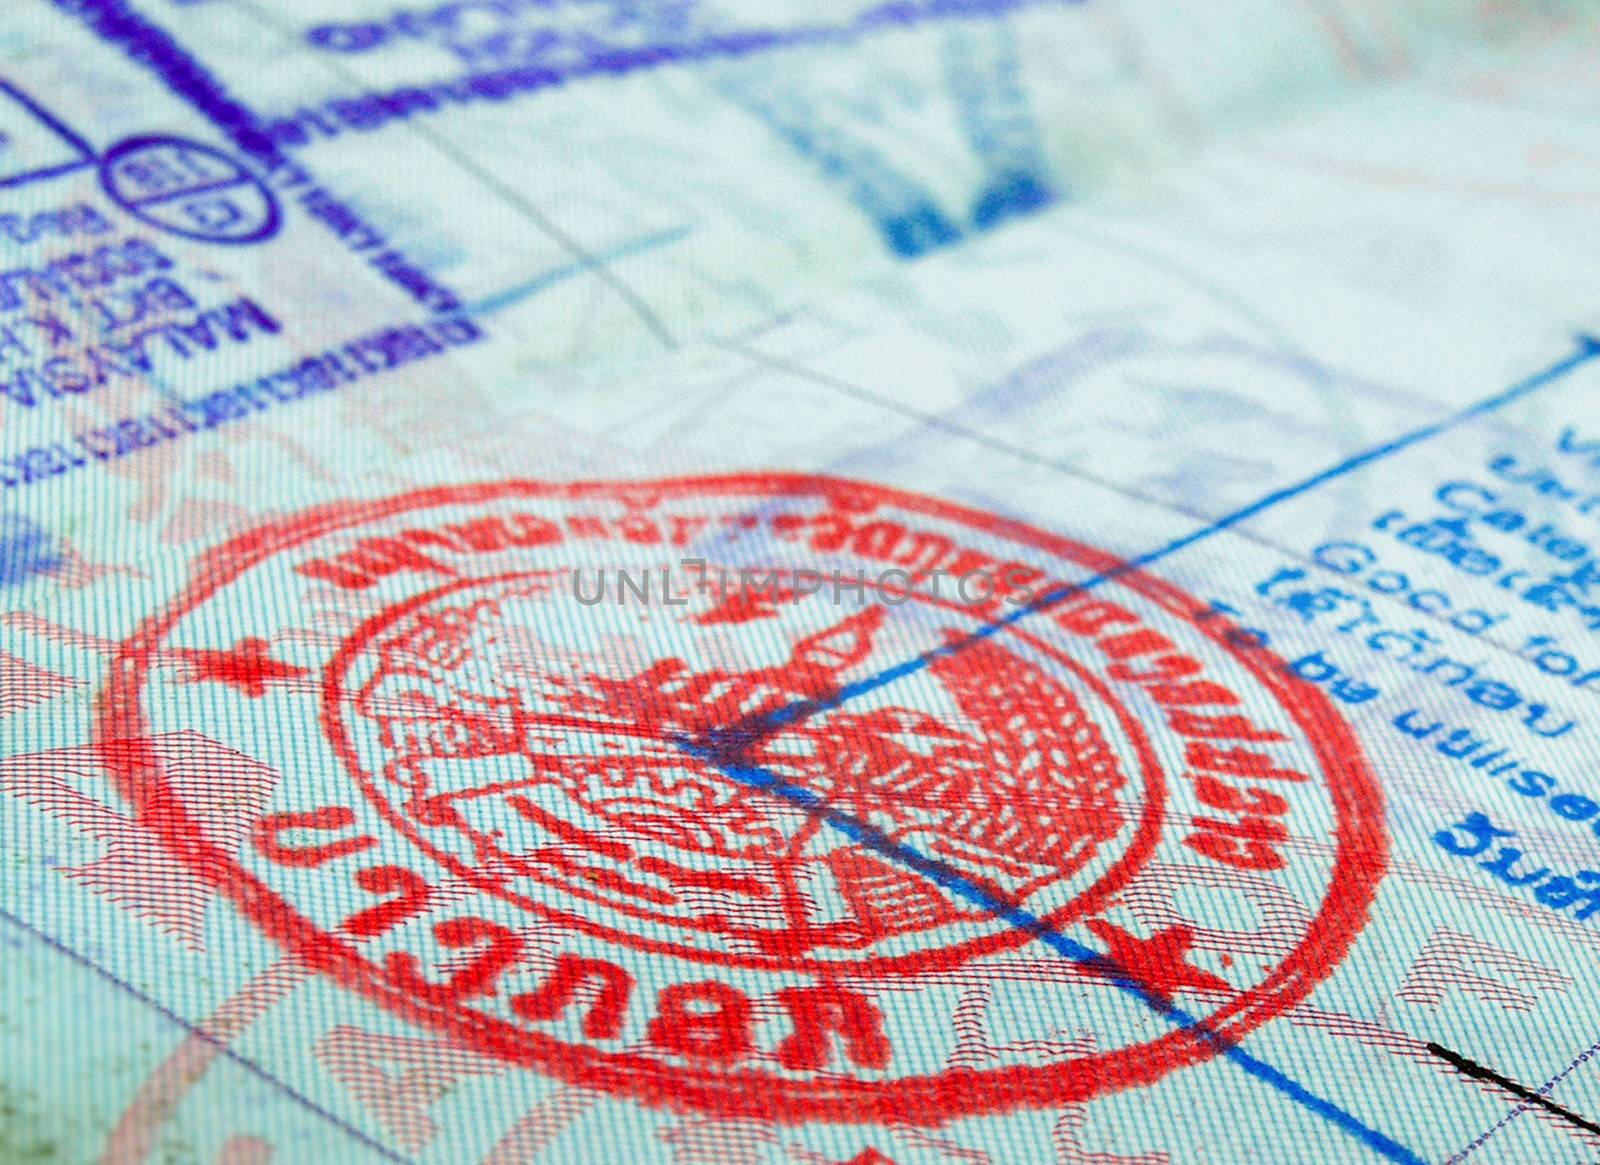 lao visa stamp in a us passport